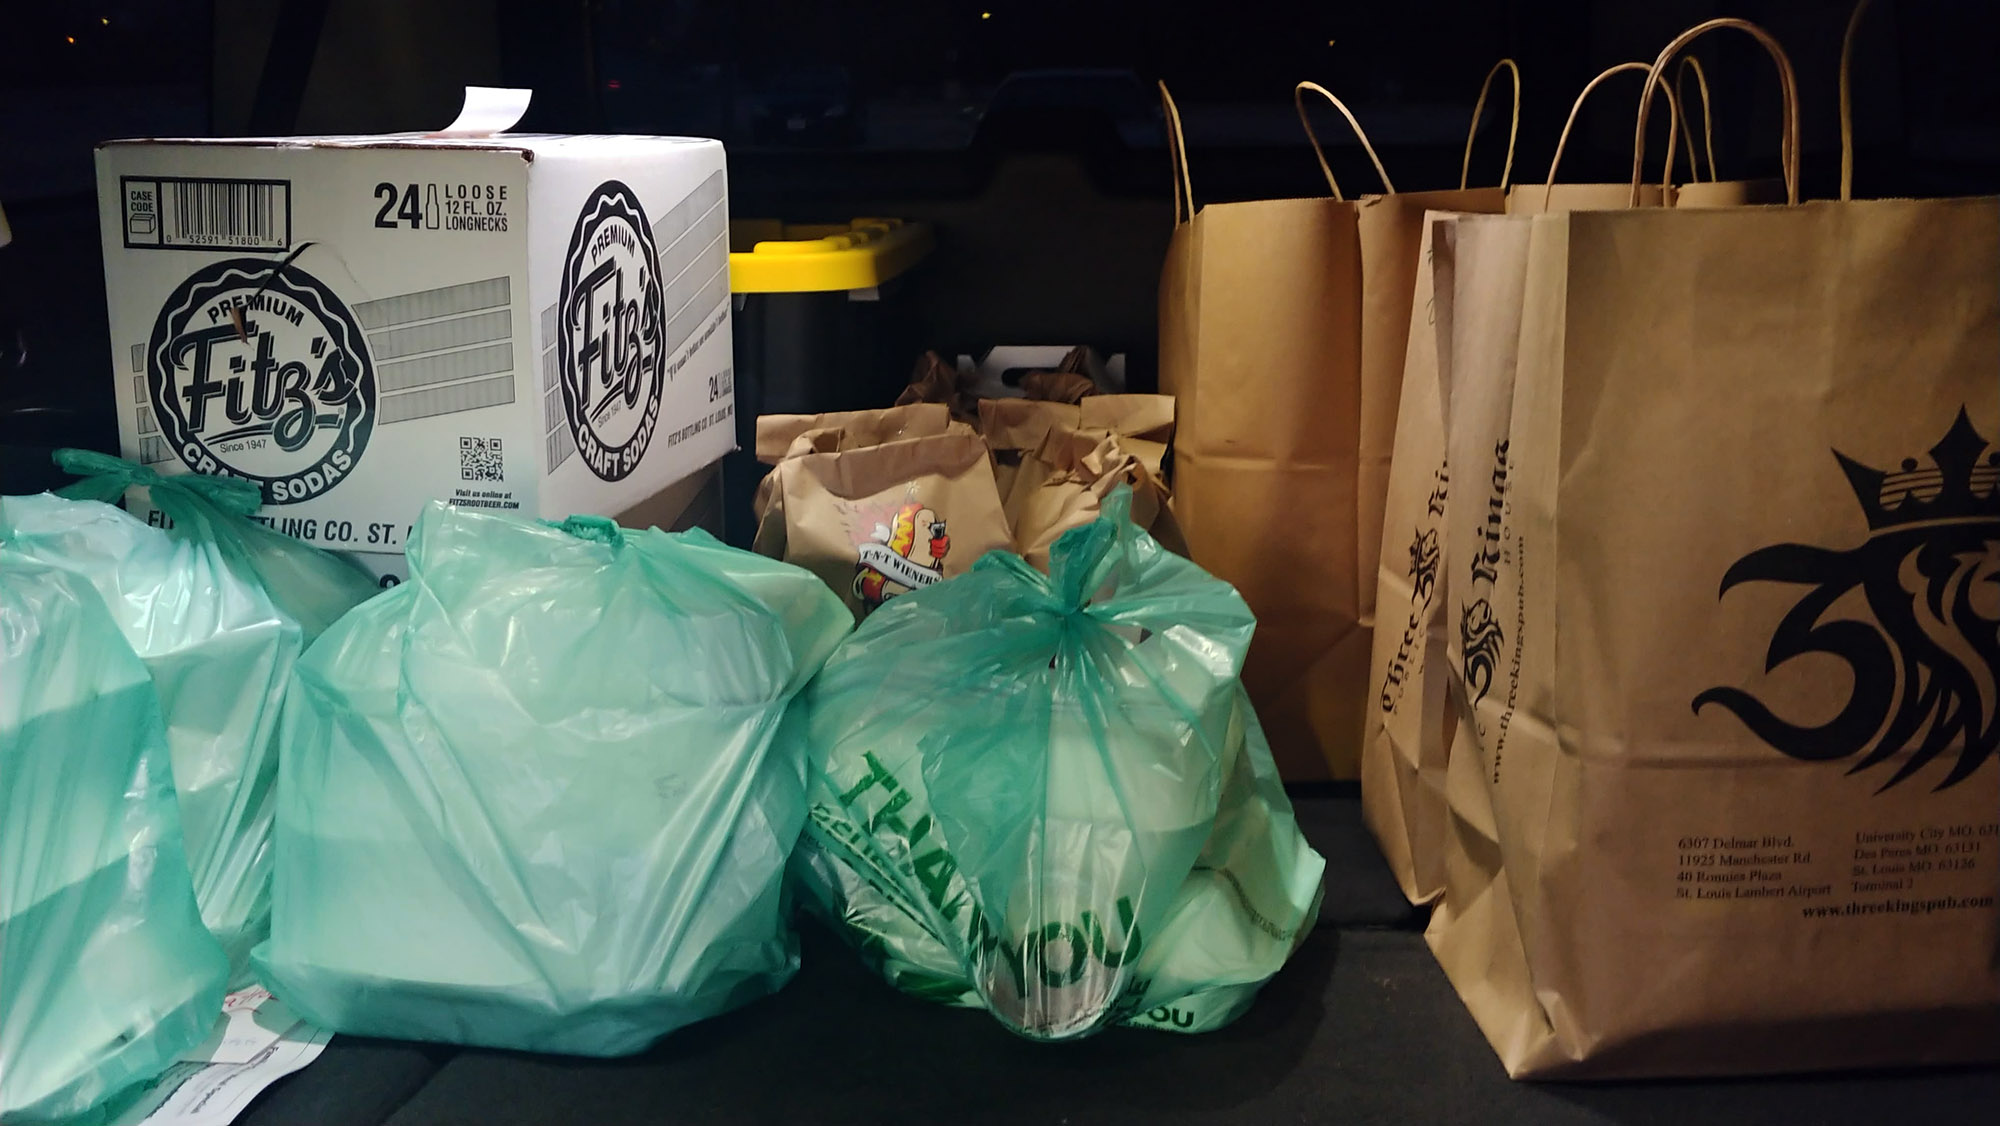 Delmar Loop restaurants donating meals to frontline workers. Here’s how you can help